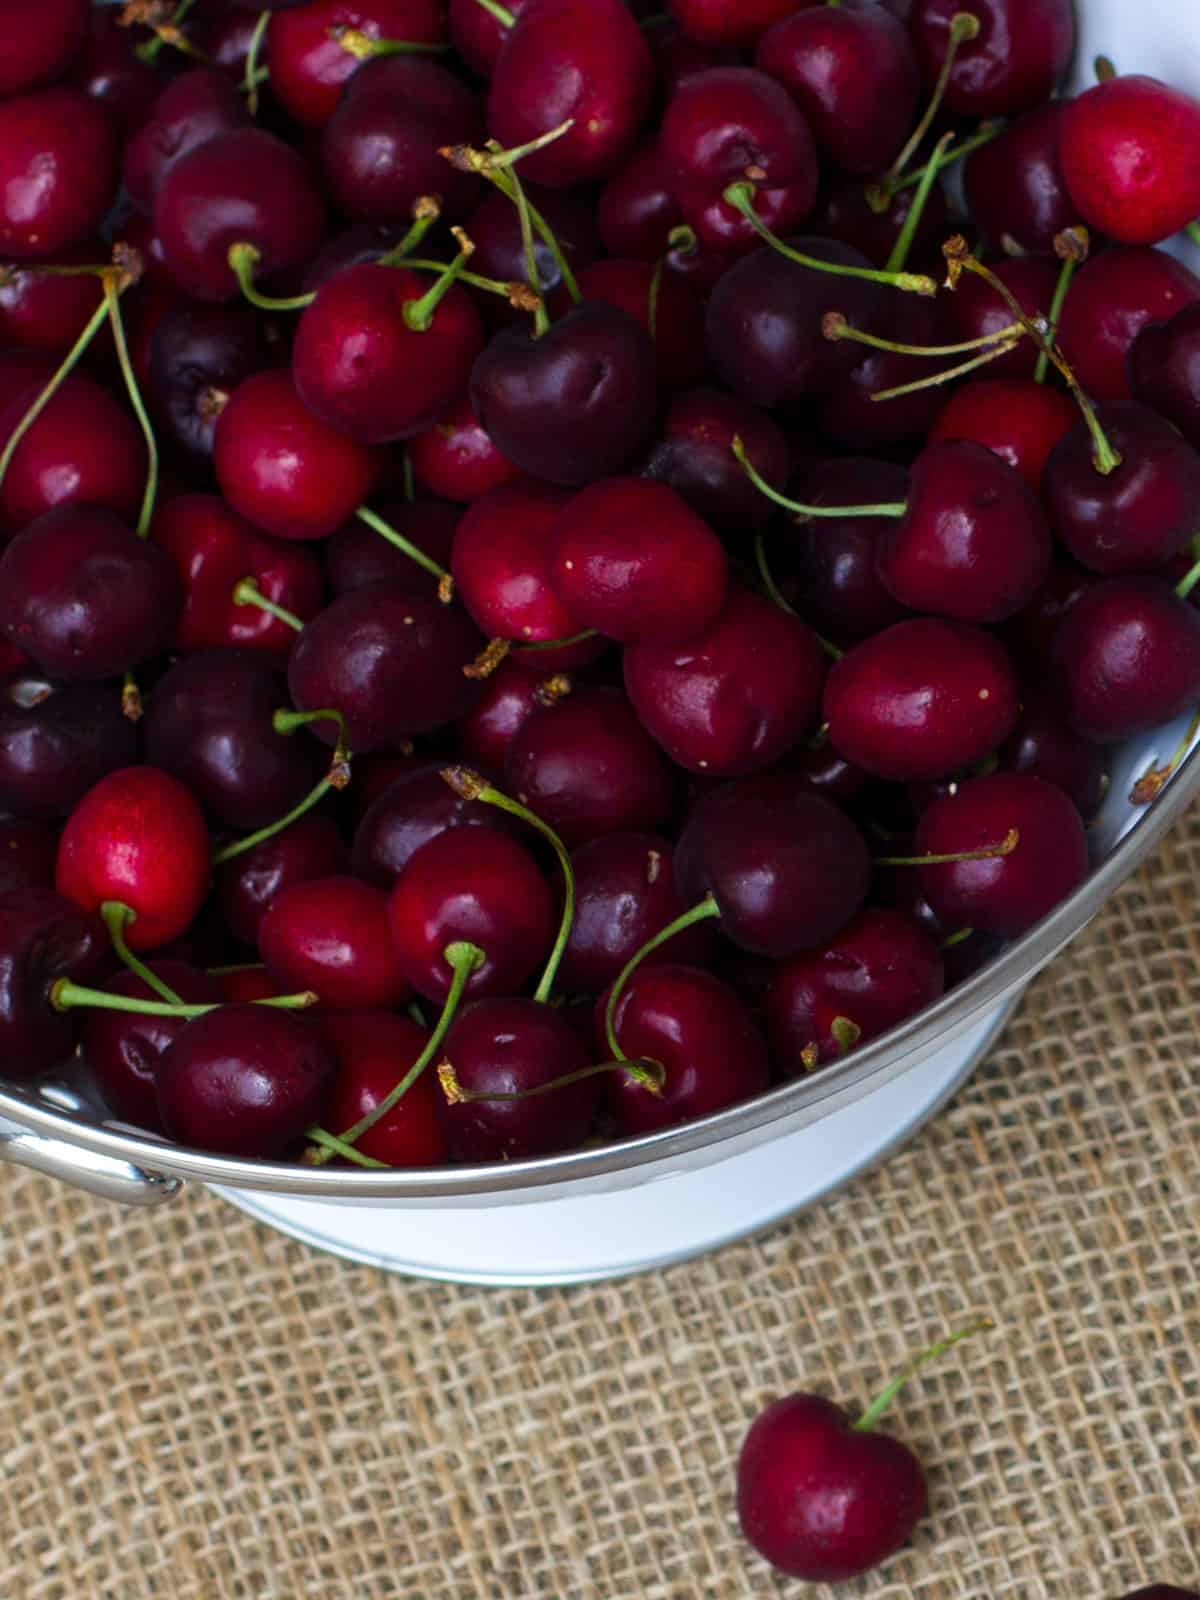 A bowl full of cherries.